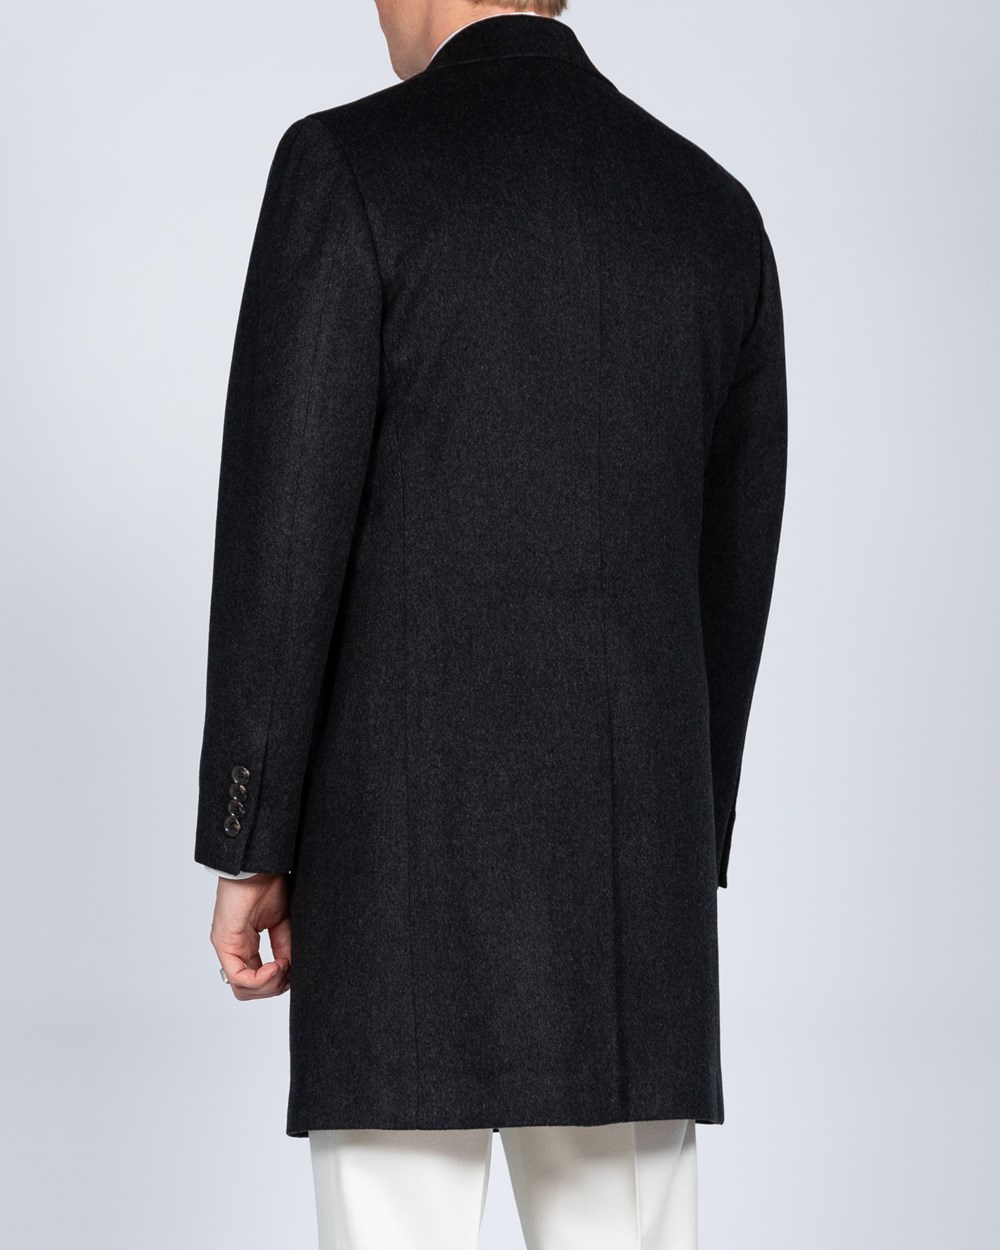 Mod 2 - Loro Piana Wool Overcoat